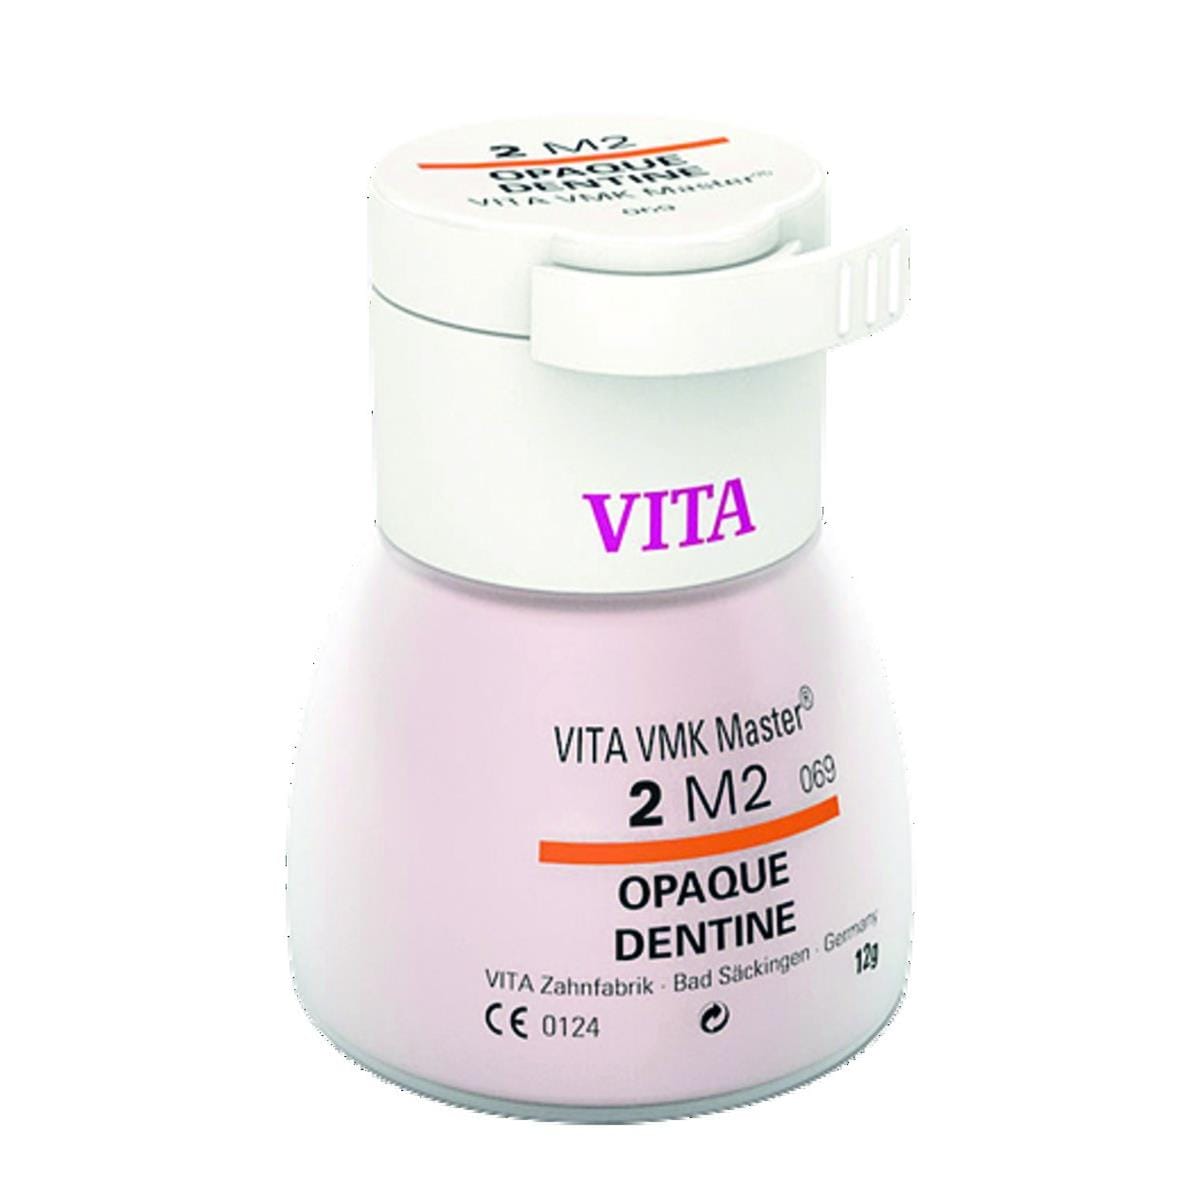 VMK Master VITA - Dentine Opaque - 4M1 - Le flacon de 12 g